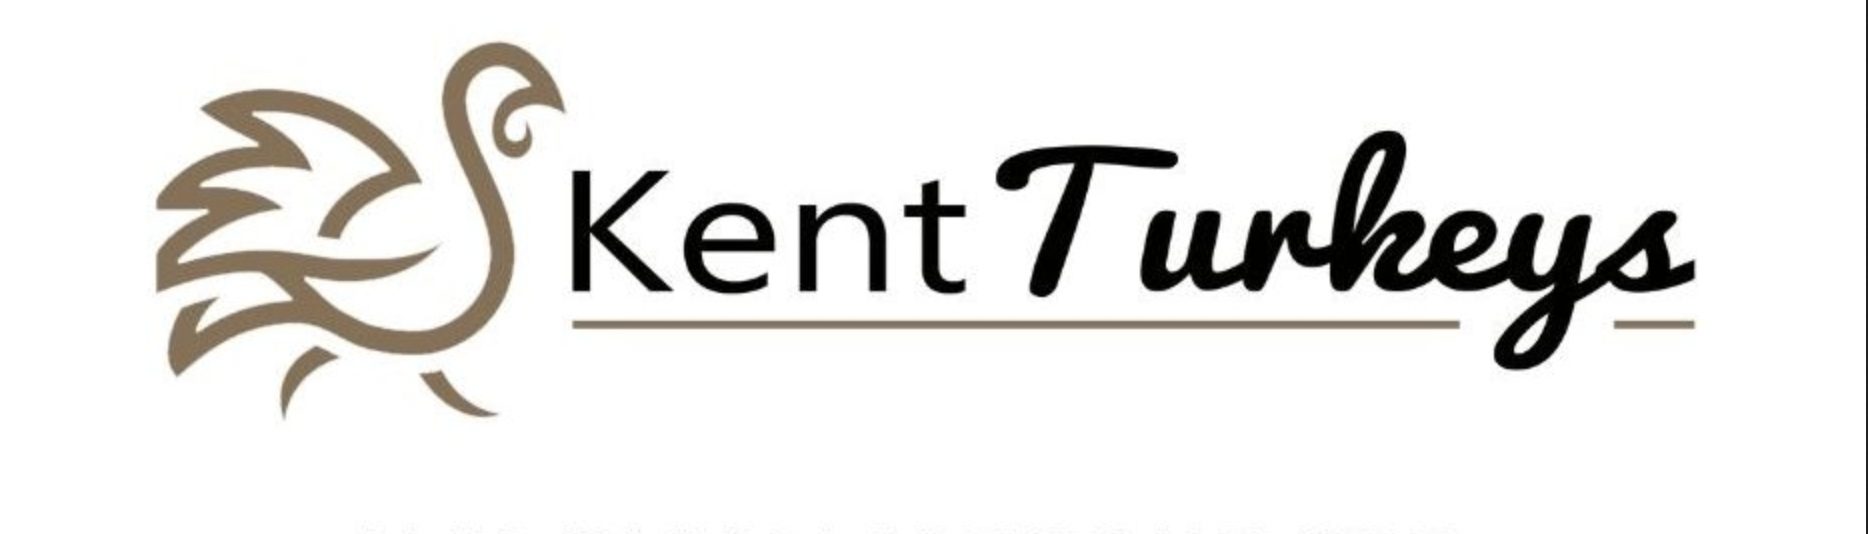 KENT TURKEYS logo